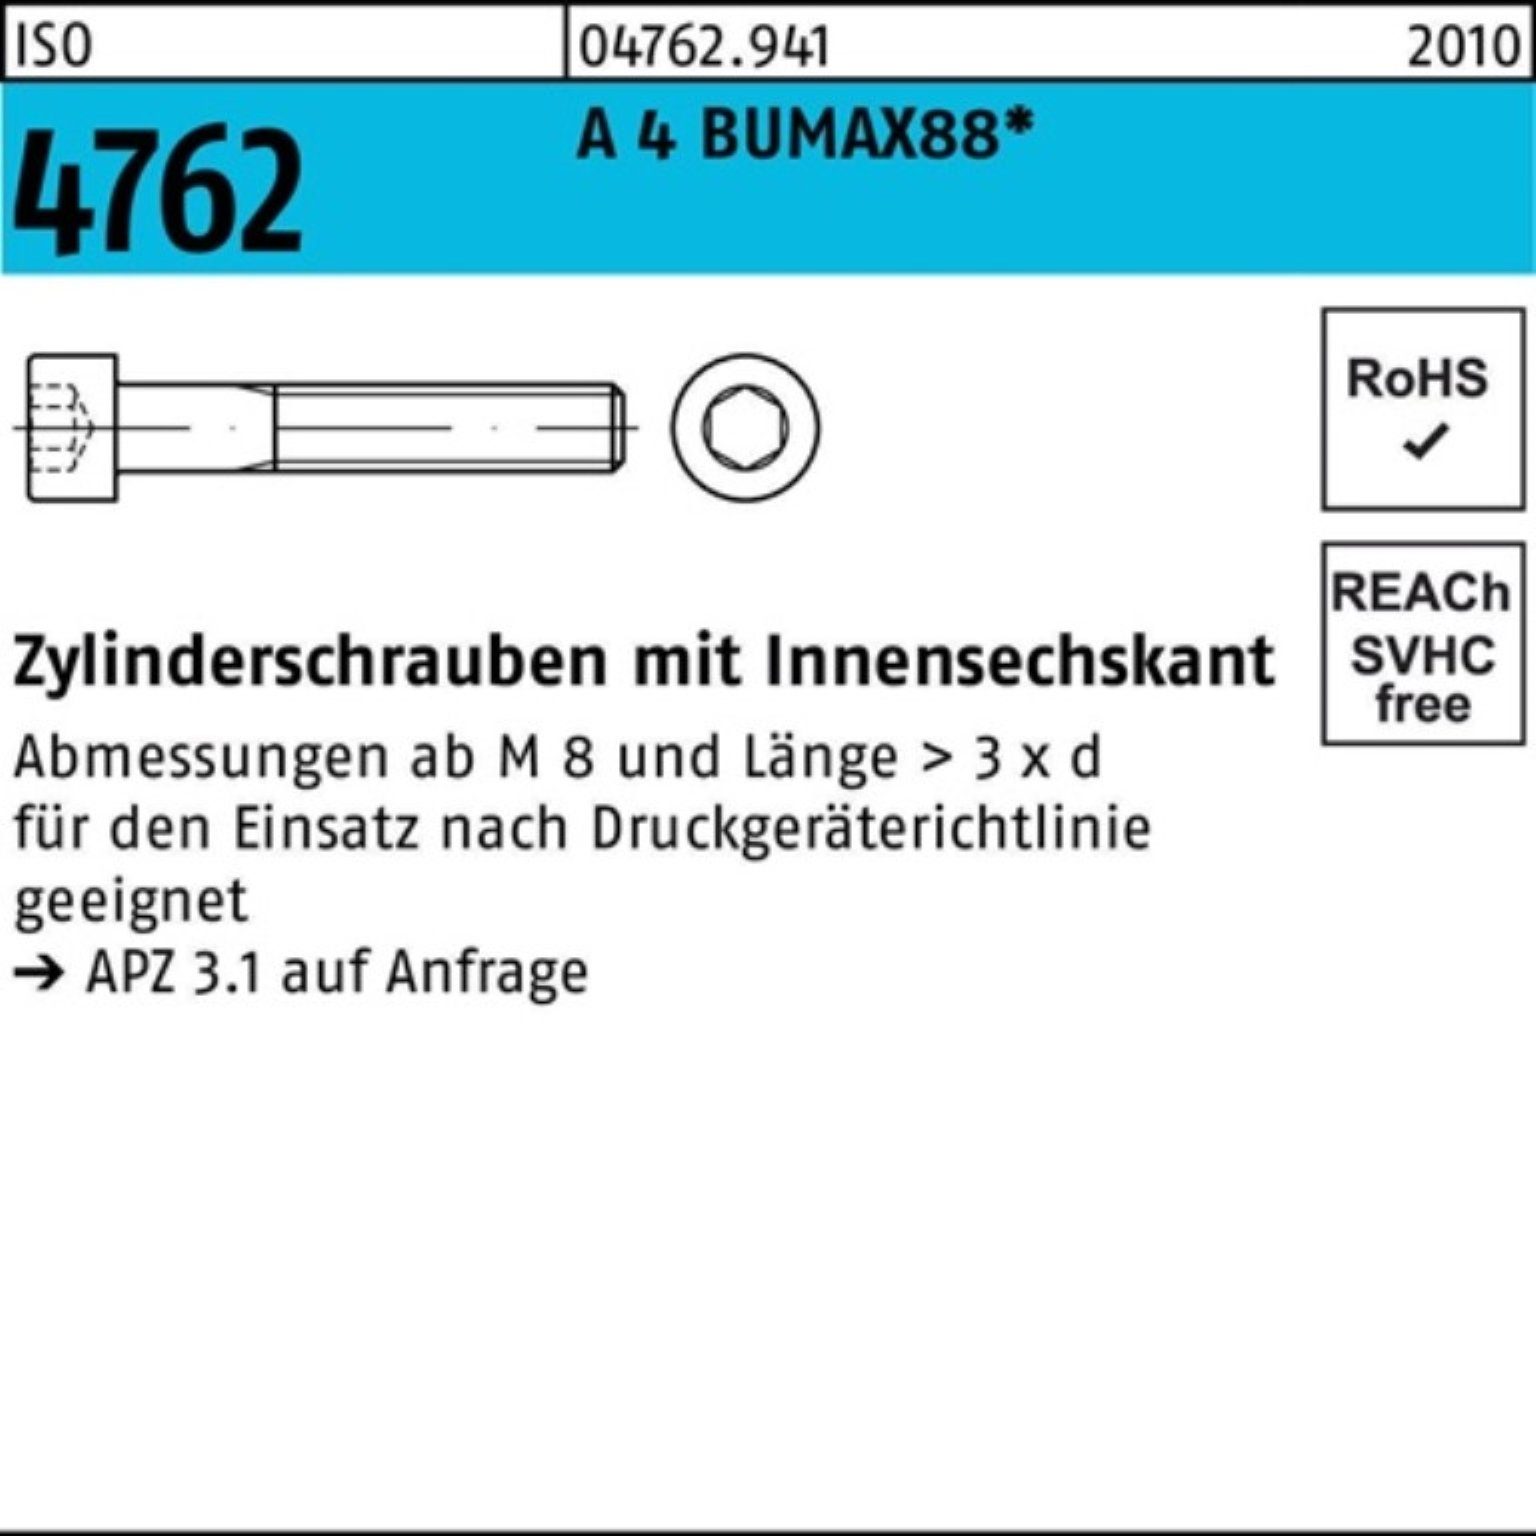 Bufab Zylinderschraube 100er Pack Zylinderschraube ISO 4762 Innen-6kt M5x 16 A 4 BUMAX88 100